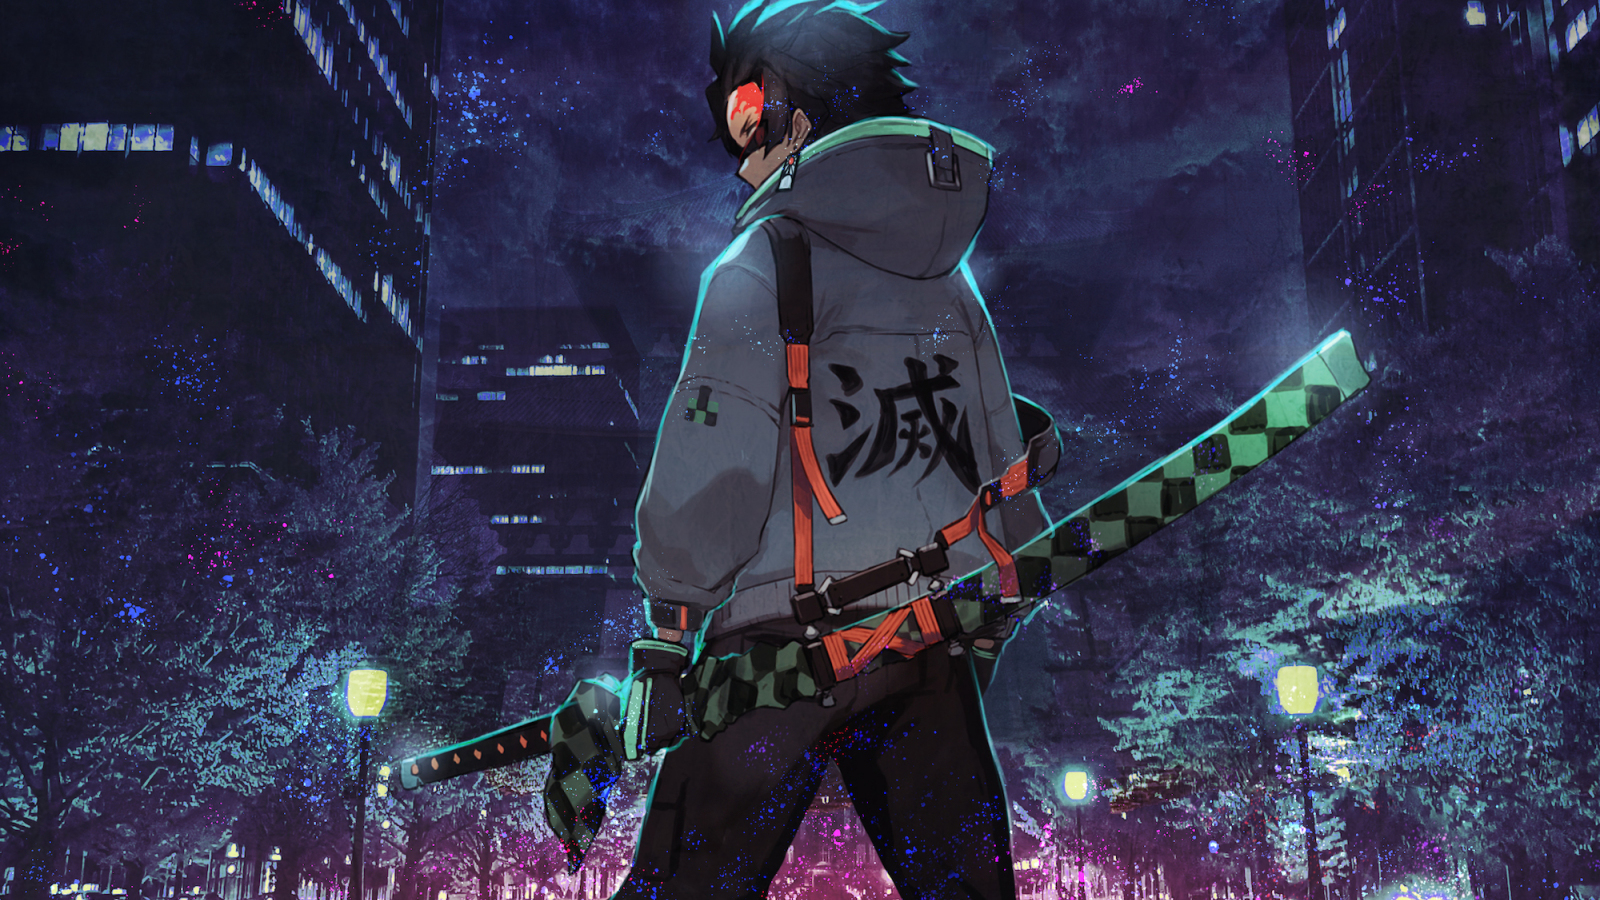 Download urban ninja, anime, art 1600x900 wallpaper, 16:9 widescreen 1600x900 HD image, background, 24906